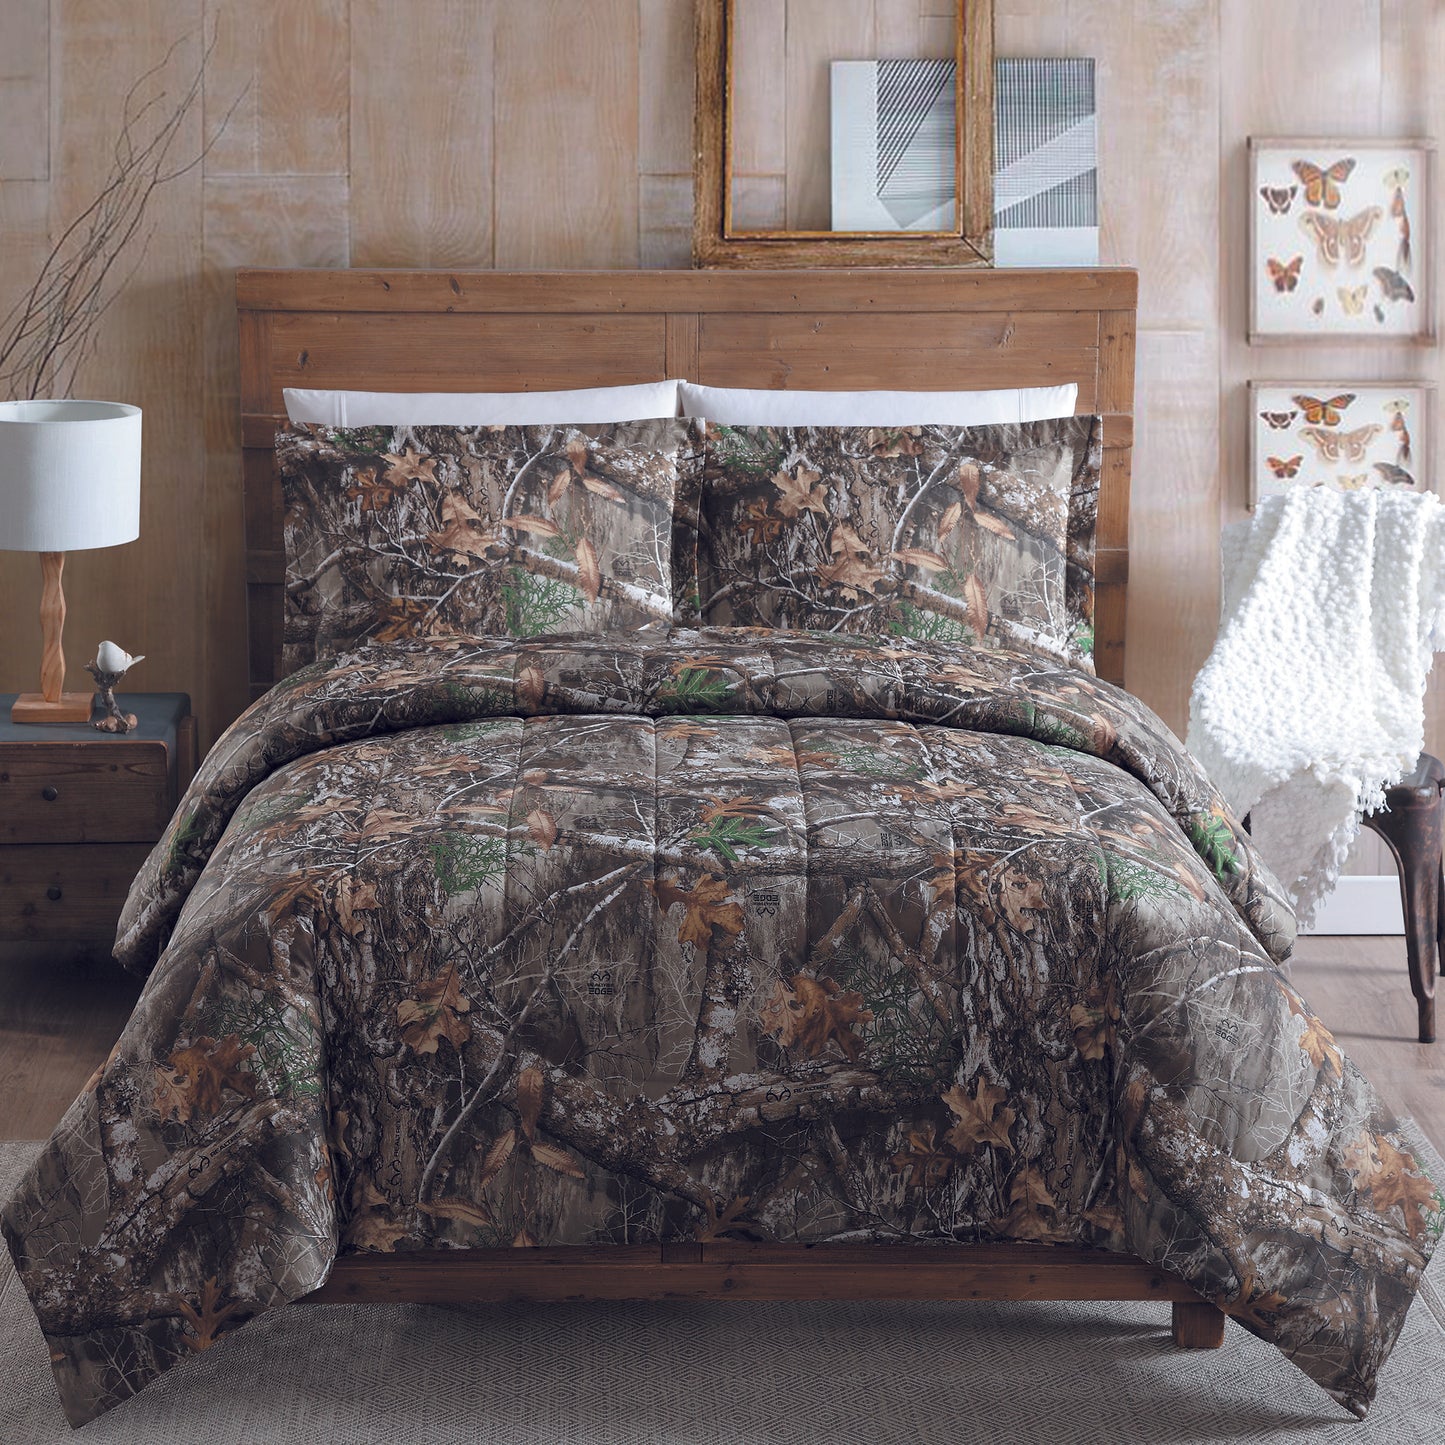 Realtree Edge Camouflage Comforter Set